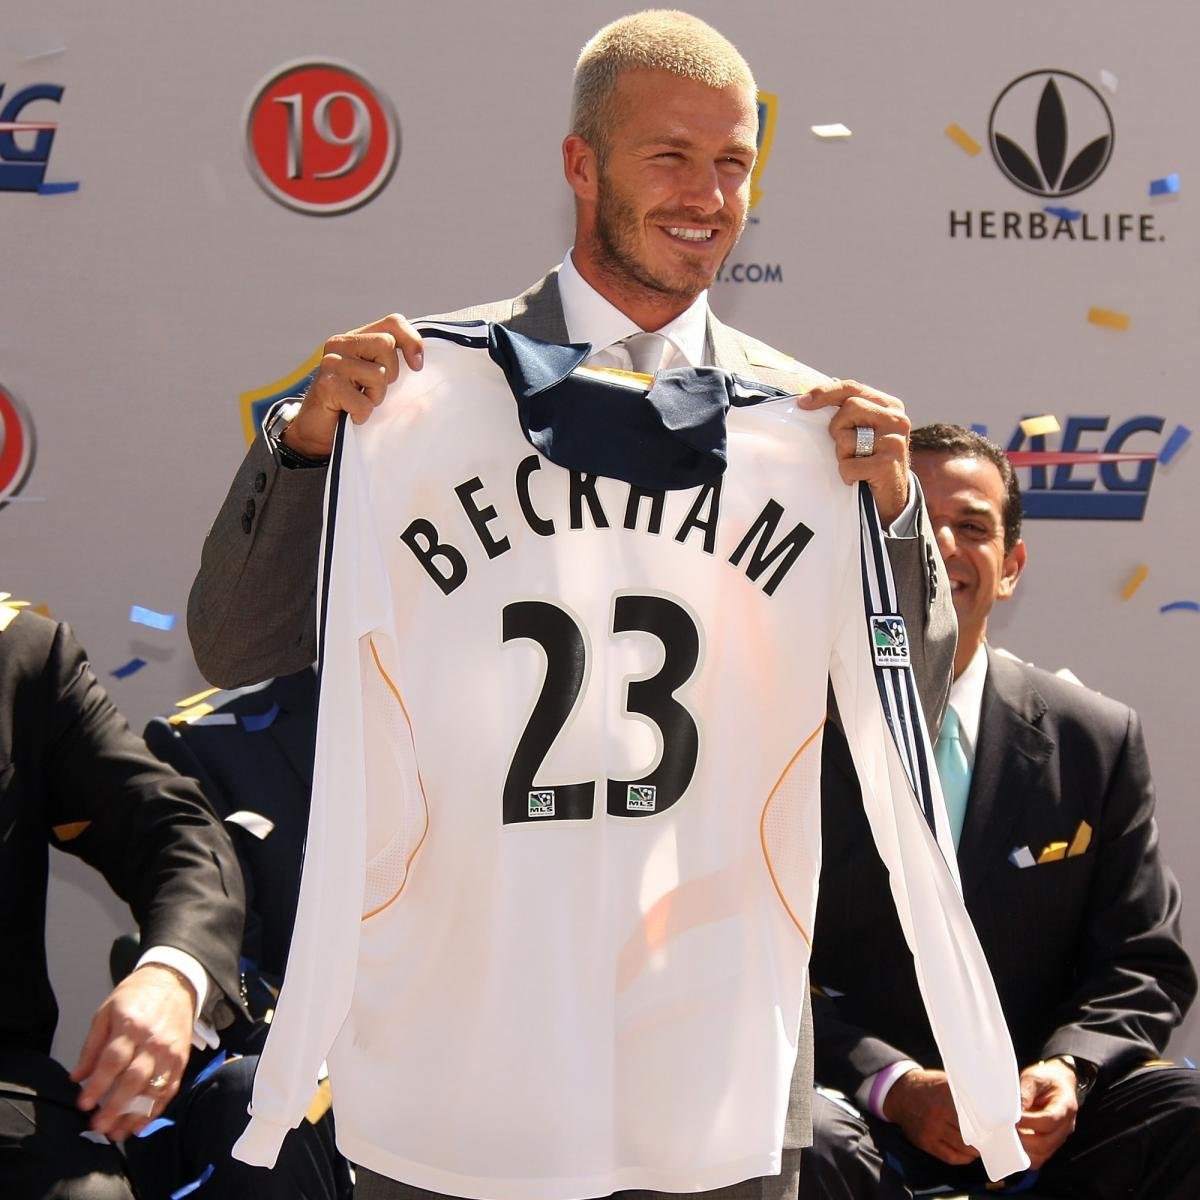 Remembering David Beckham's Arrival at LA Galaxy